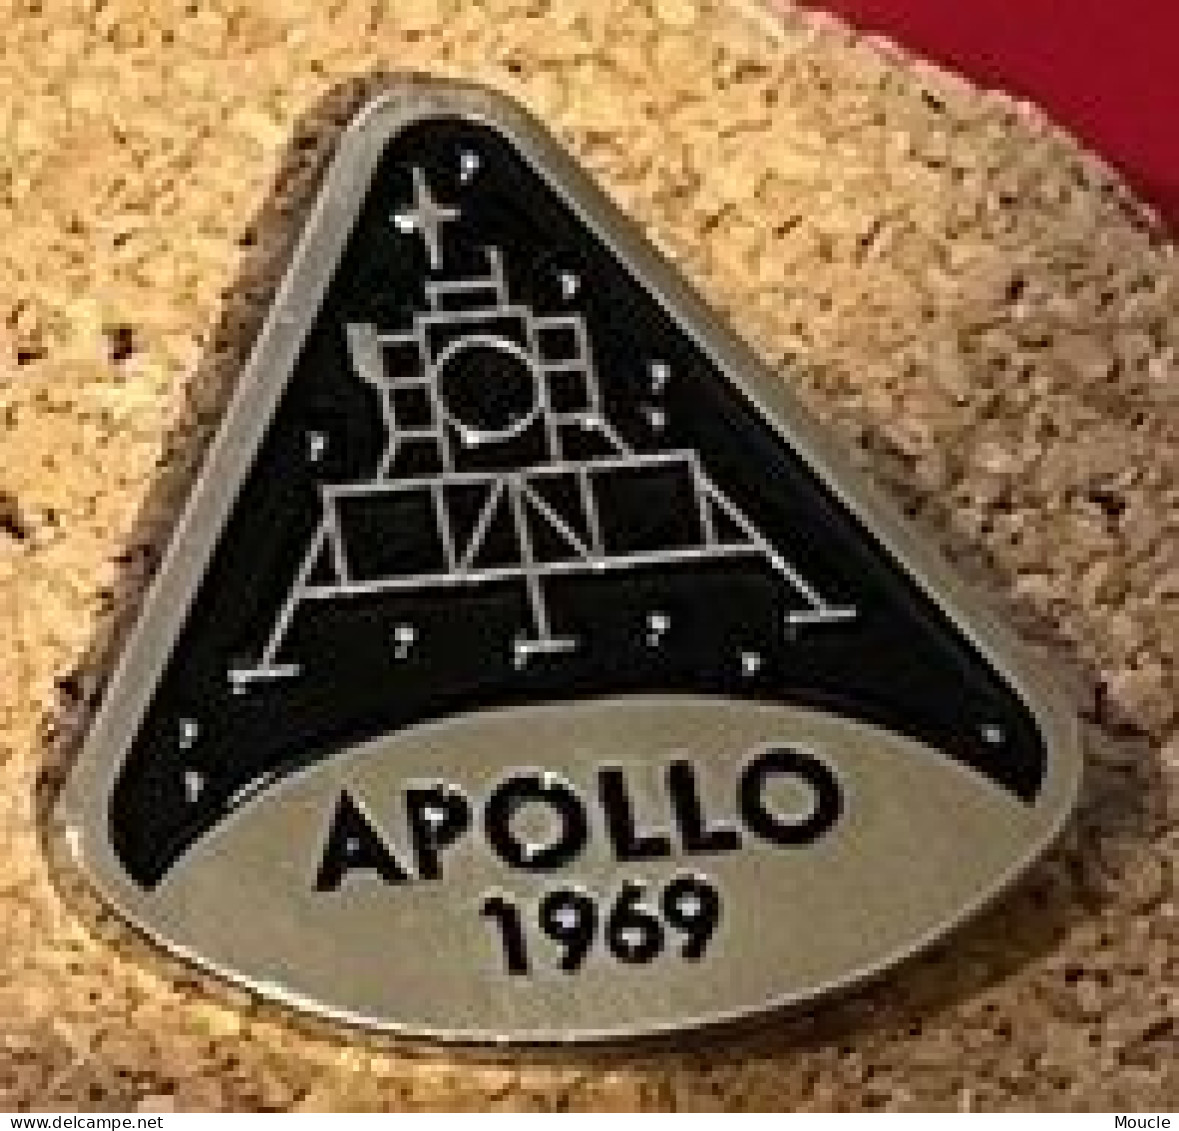 APOLLO 1969 - NASA - ESPACE - SPACE - MODULE - FUSEE -  (30) - Espace